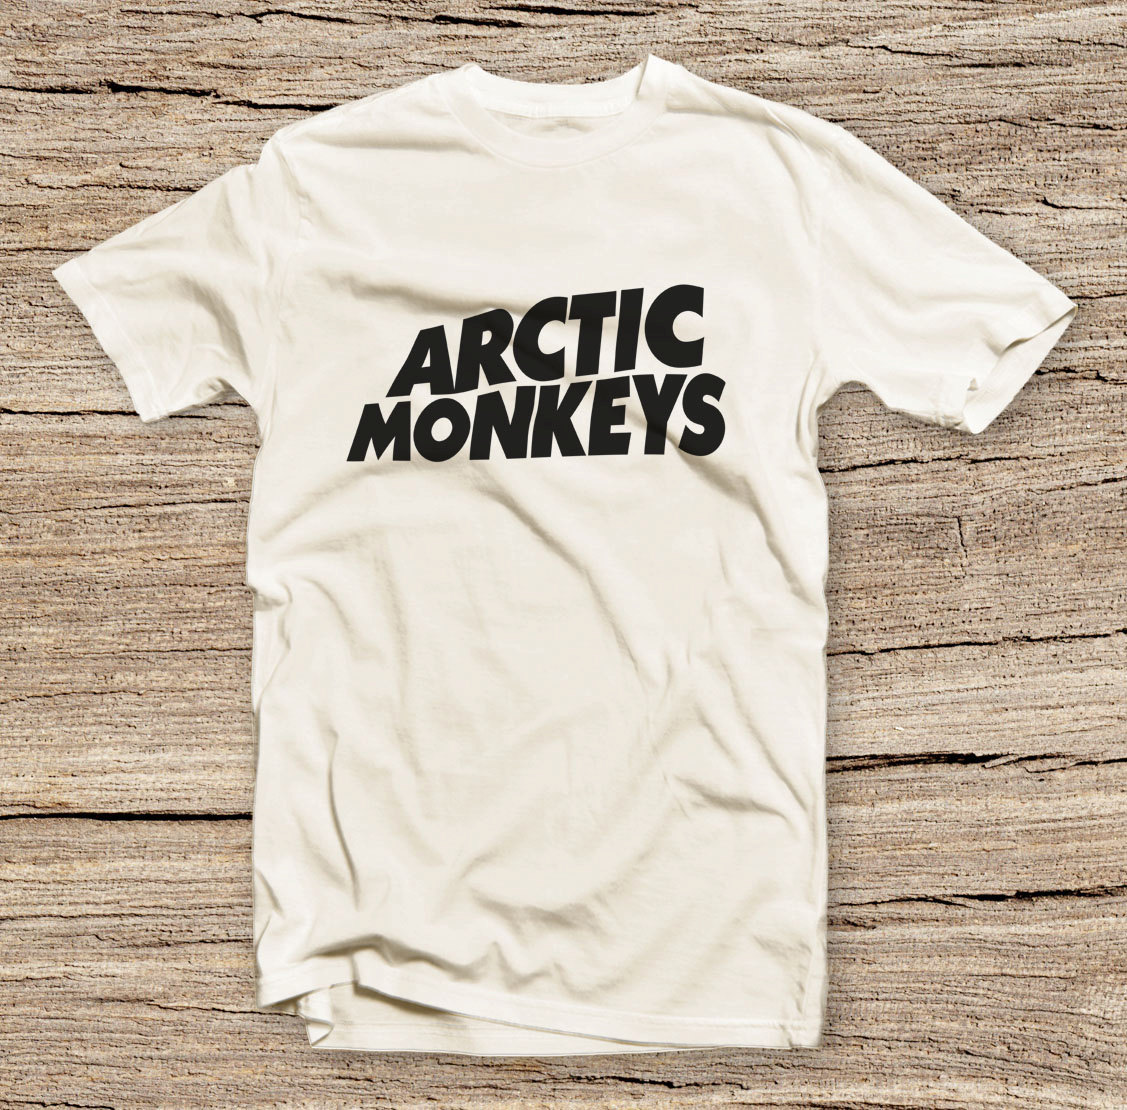 Pts-190 Arctic Monkeys Shirts Rock Shirts, Arctic Monkeys Am Shirt Unisex Shirts, Fashion Printed T-shirt